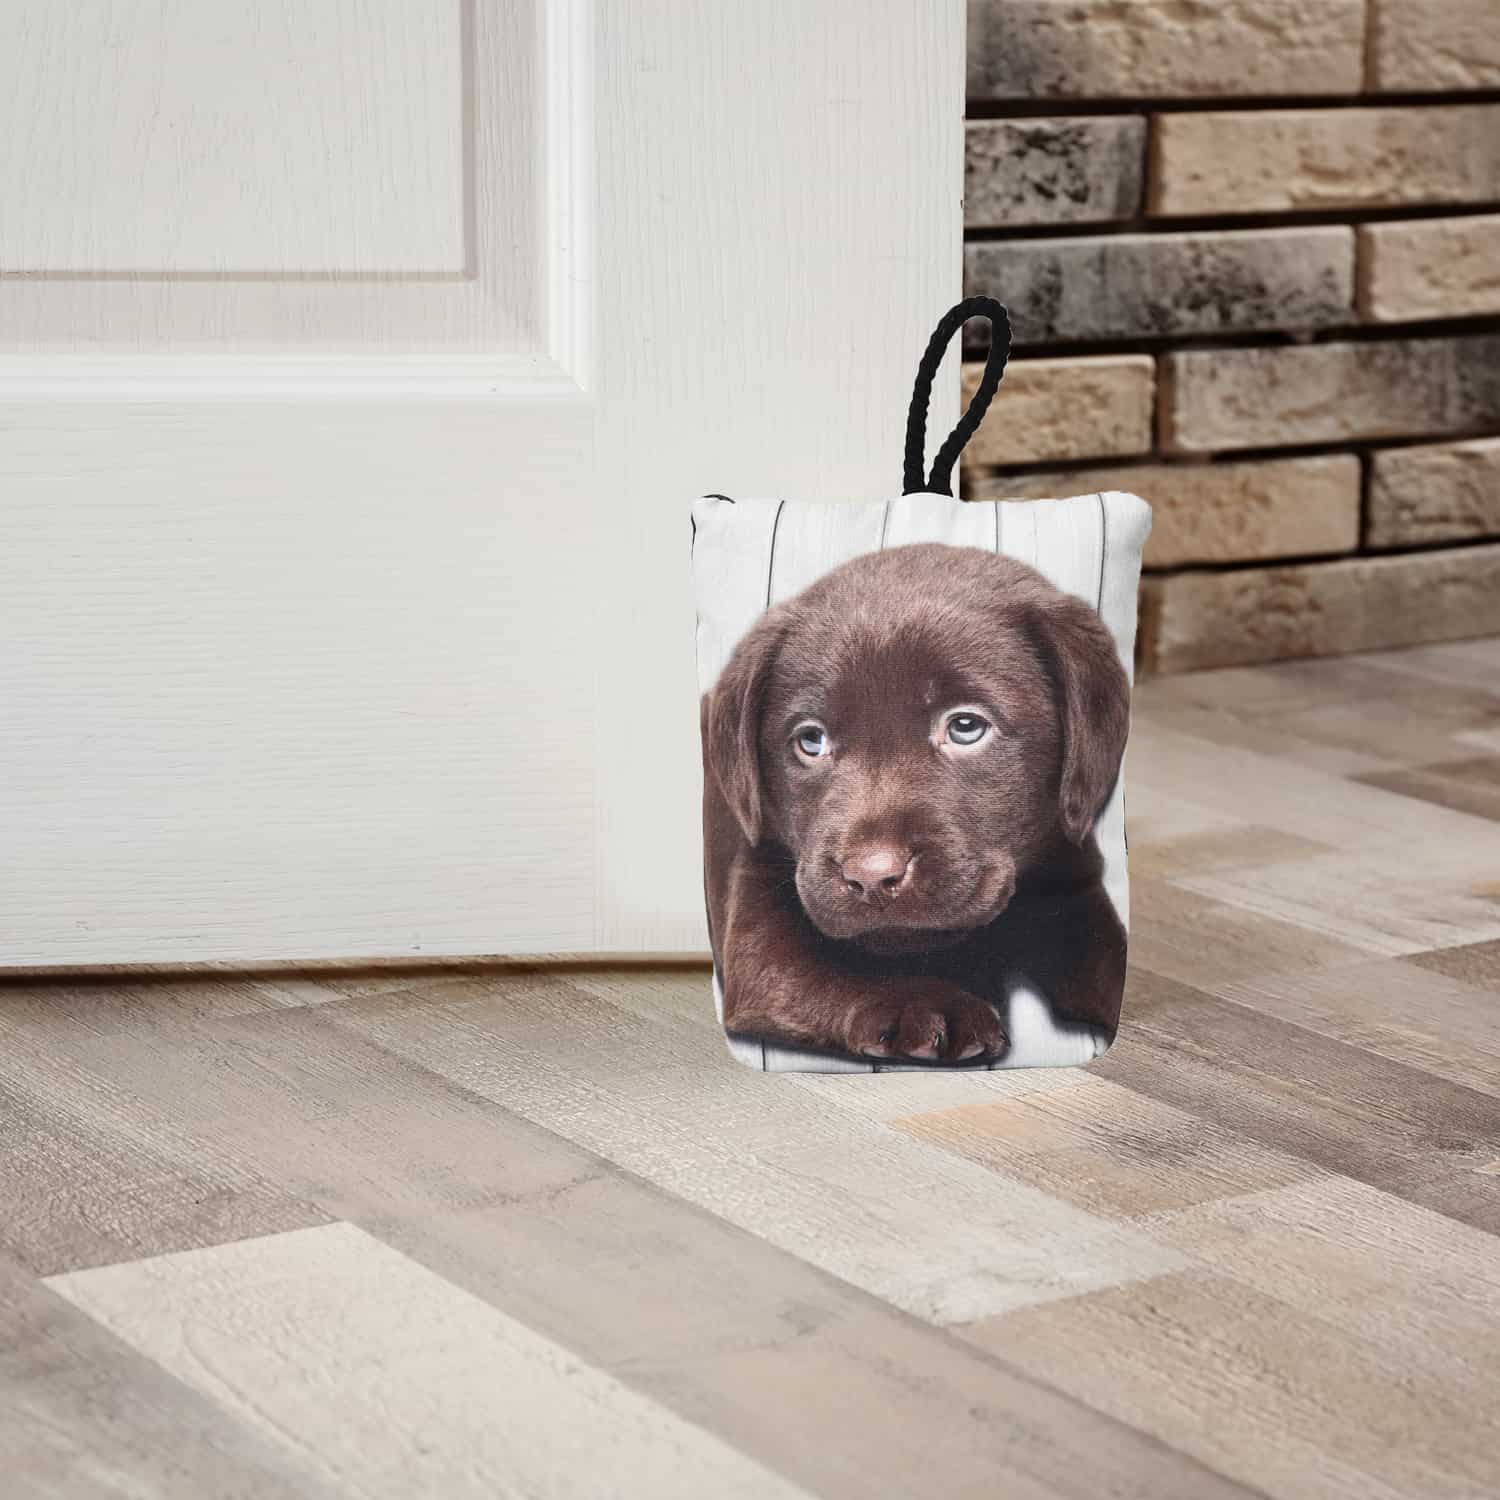 Labrador Printed Fabric Bag Door Stop Interior Weighted Floor 2.2 lbs